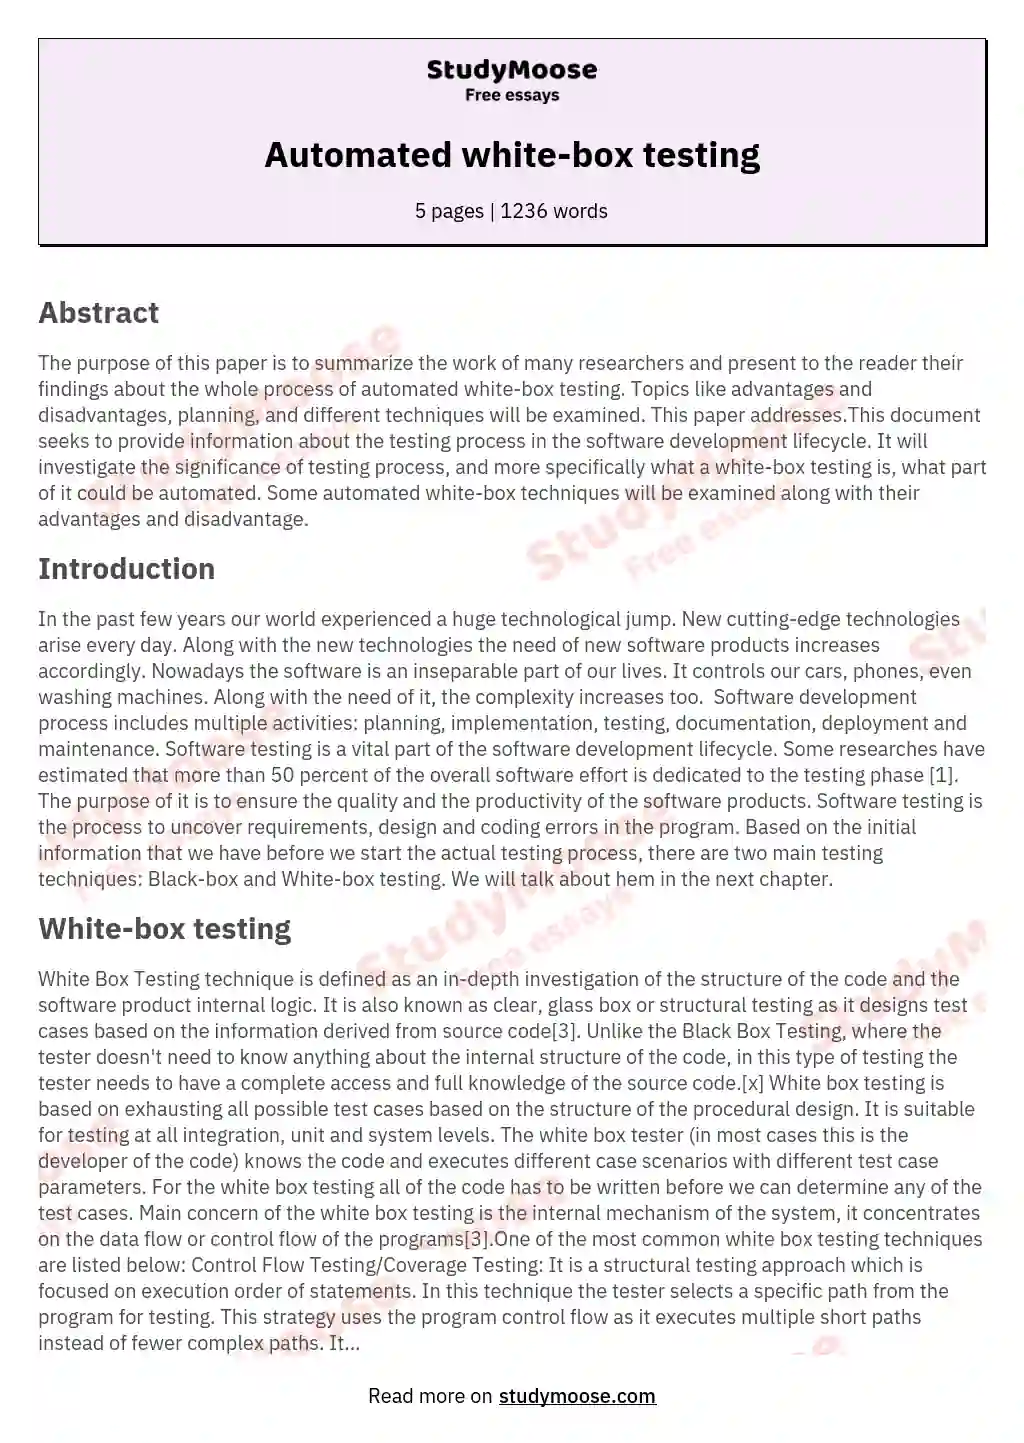 Automated white-box testing essay